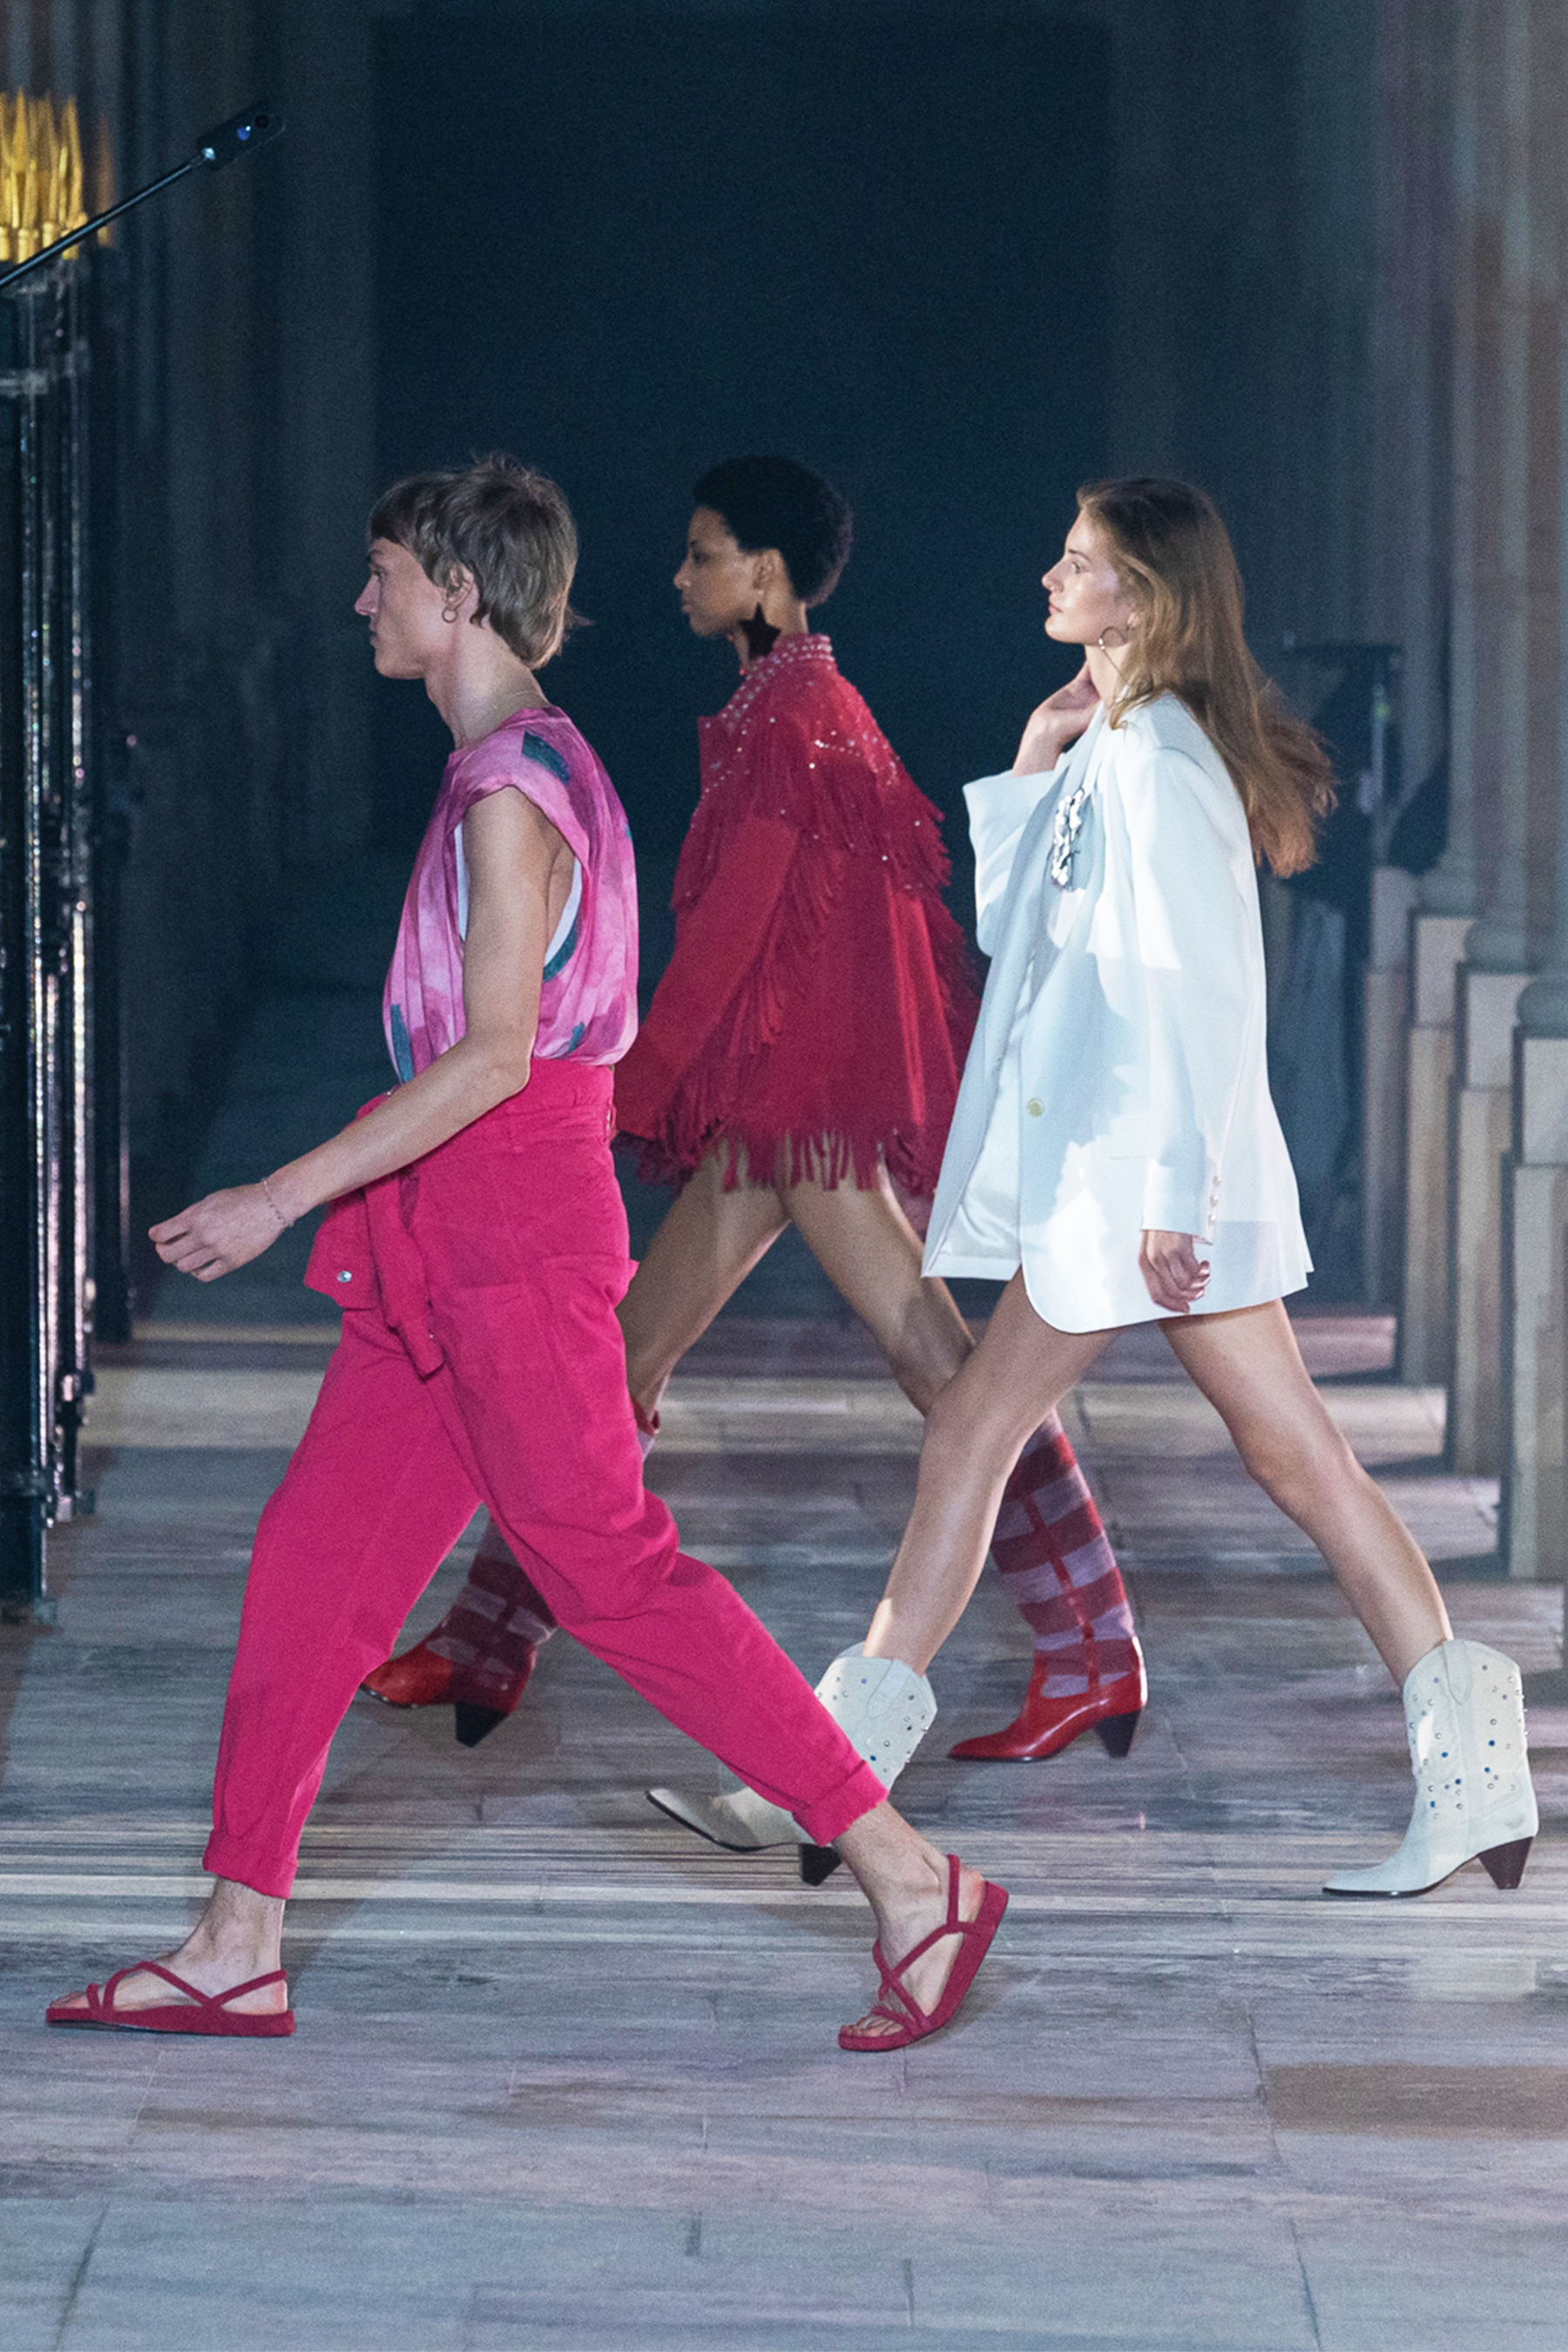 Chloe sparkles as giant Paris fashion exhibit space opens